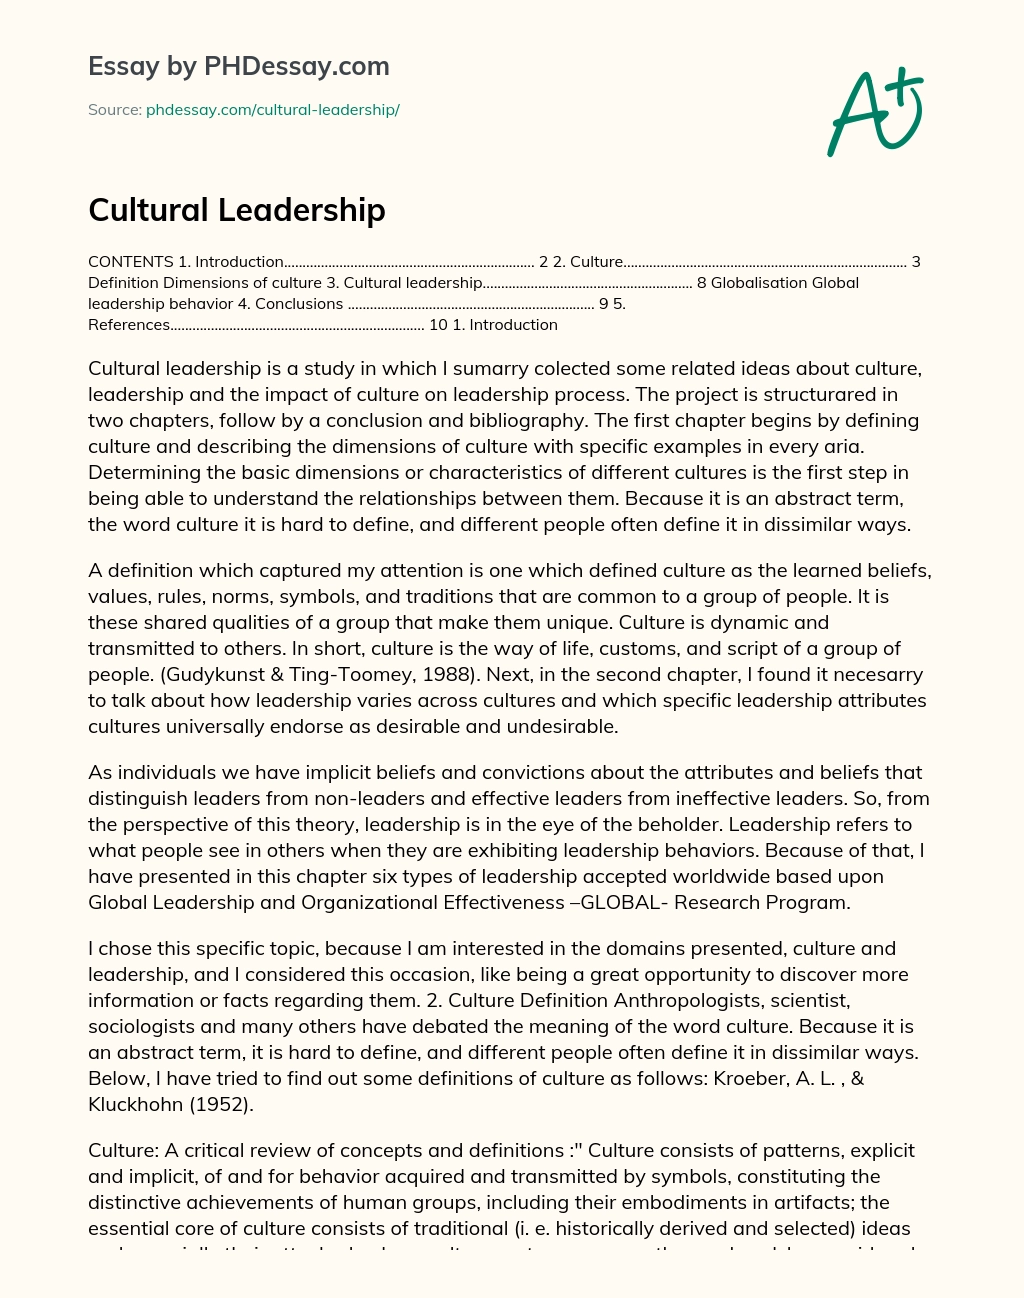 Cultural Leadership essay